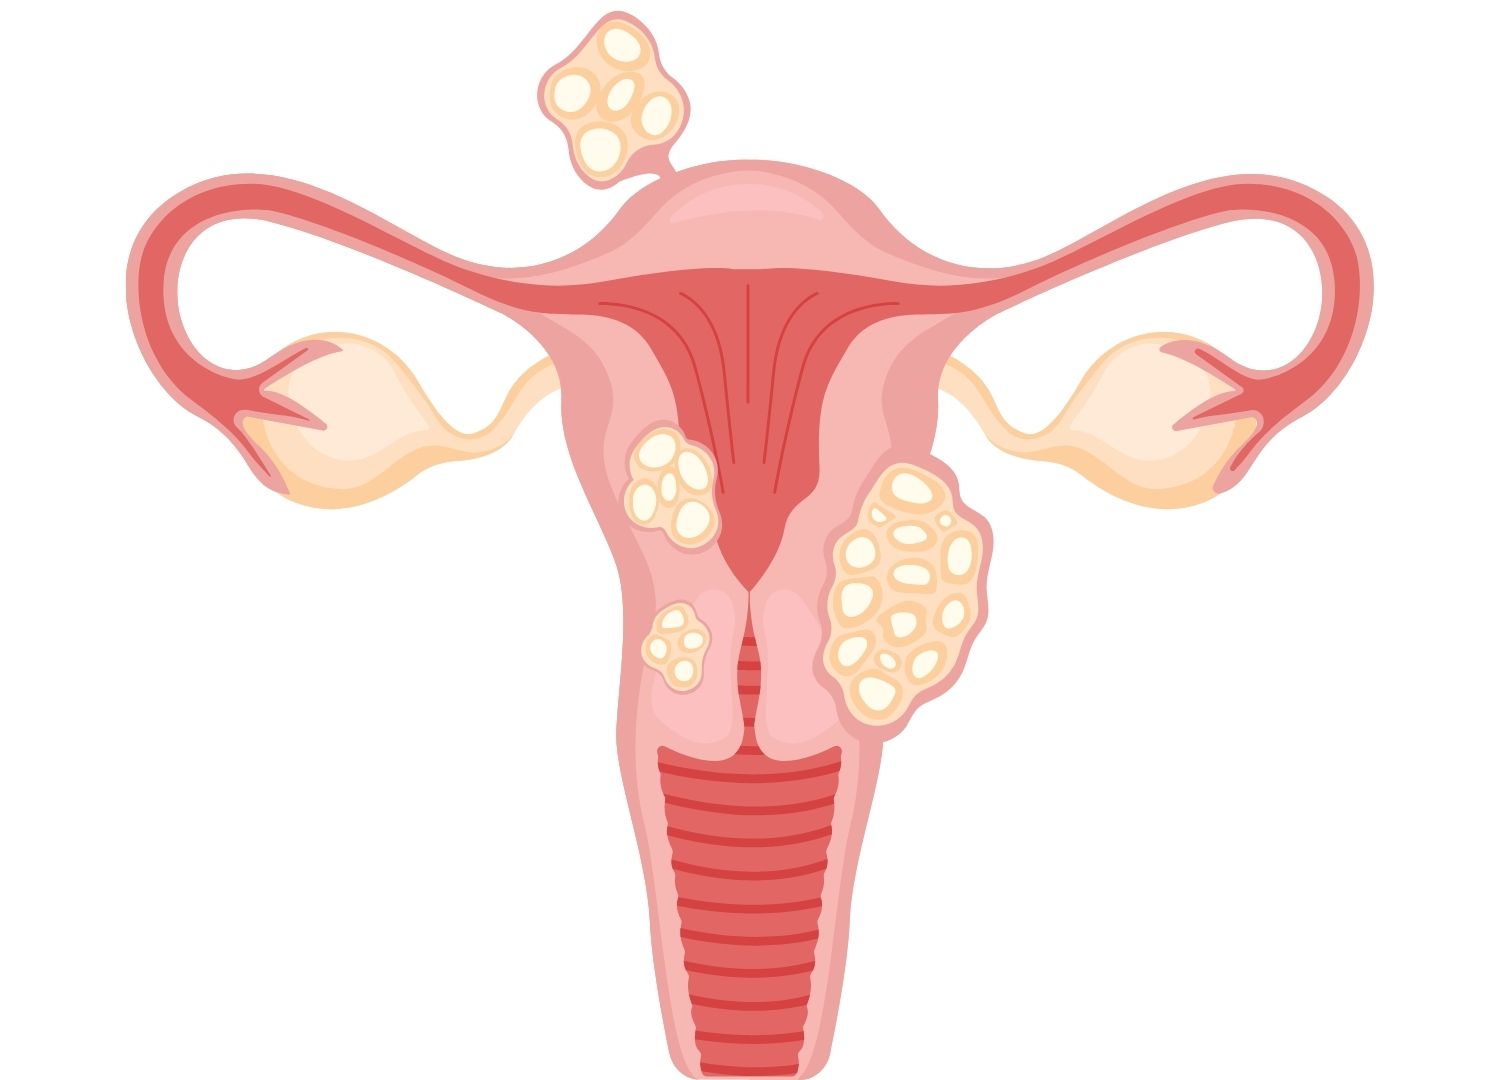 "Cervical cancer: Risk factors,  causes and treatment (Pidgin)"